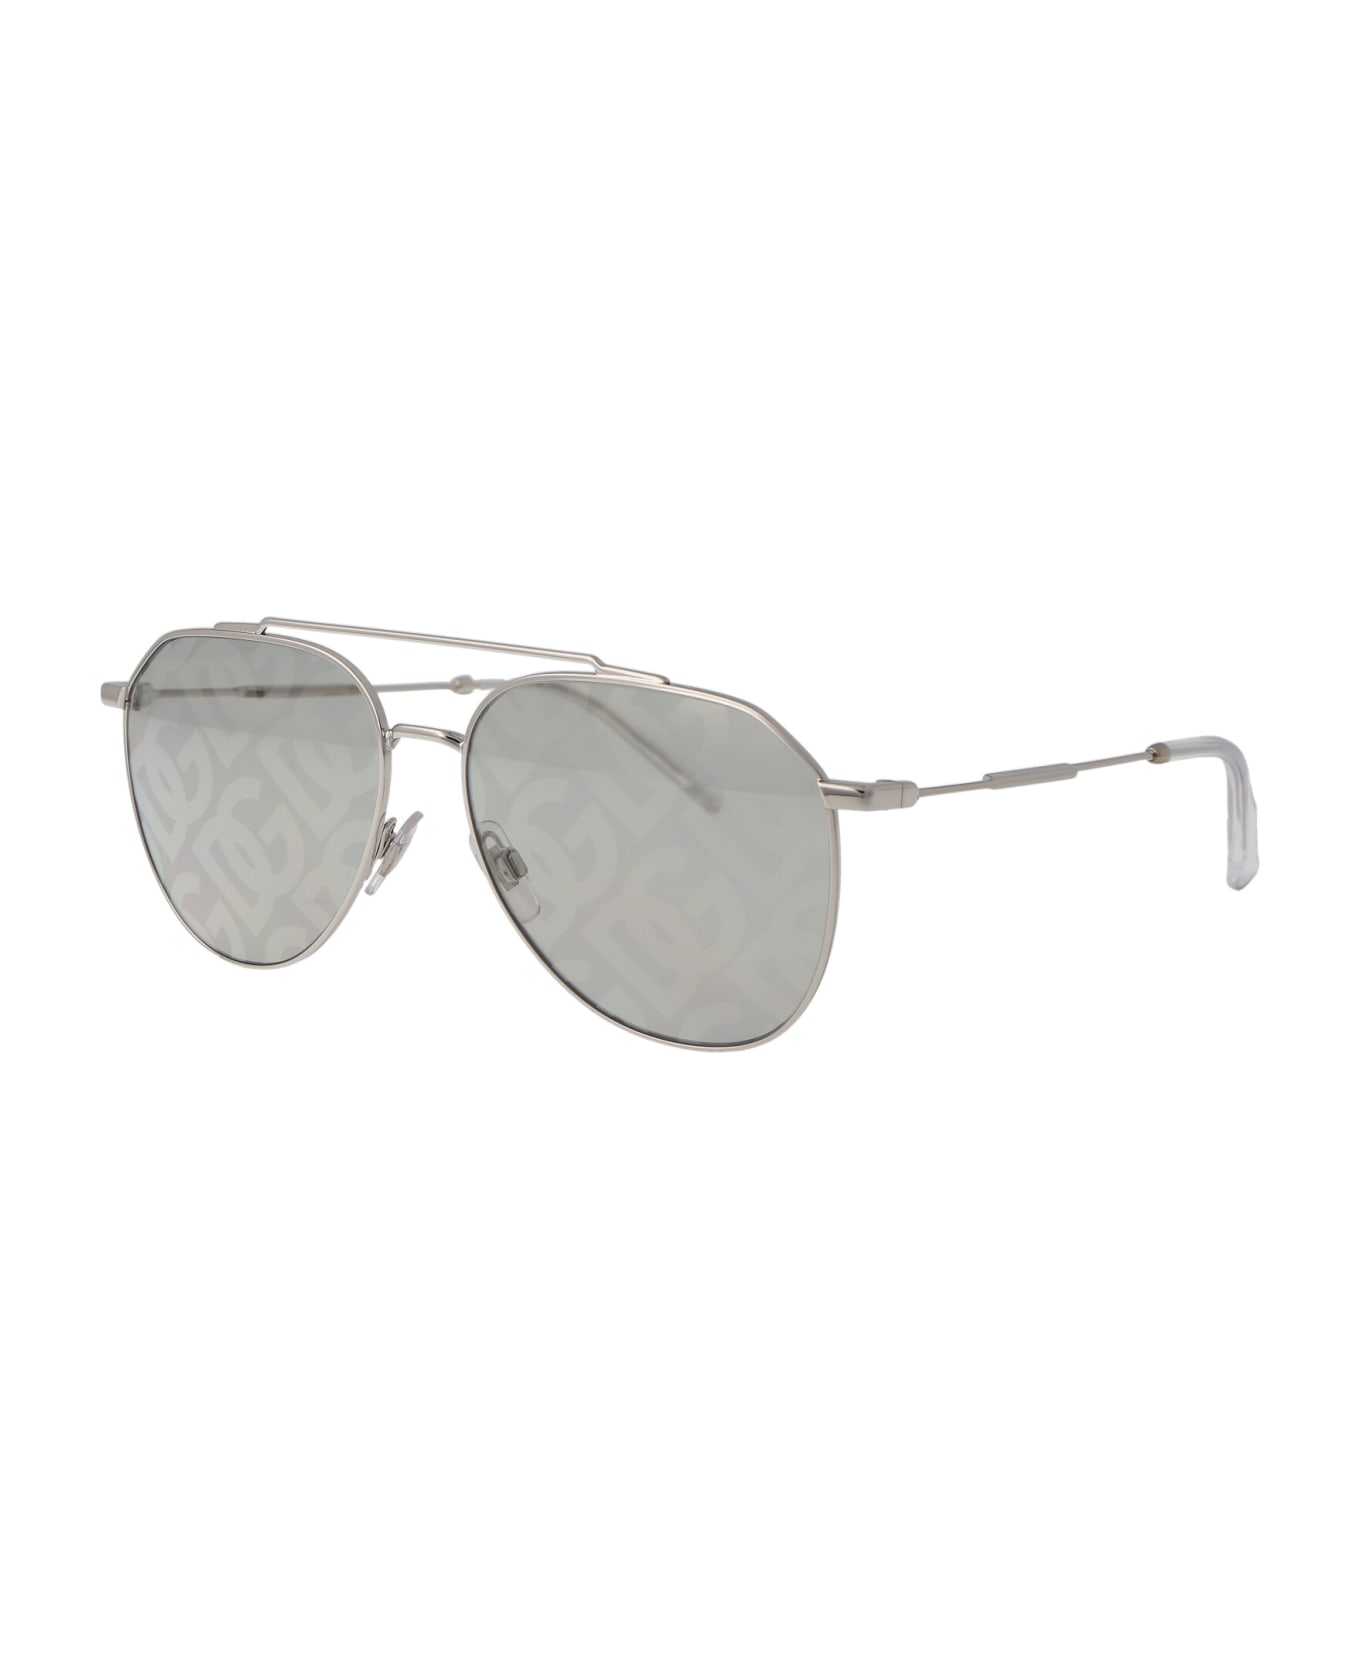 Dolce & Gabbana Eyewear 0dg2296 Sunglasses - 05/AL Silver